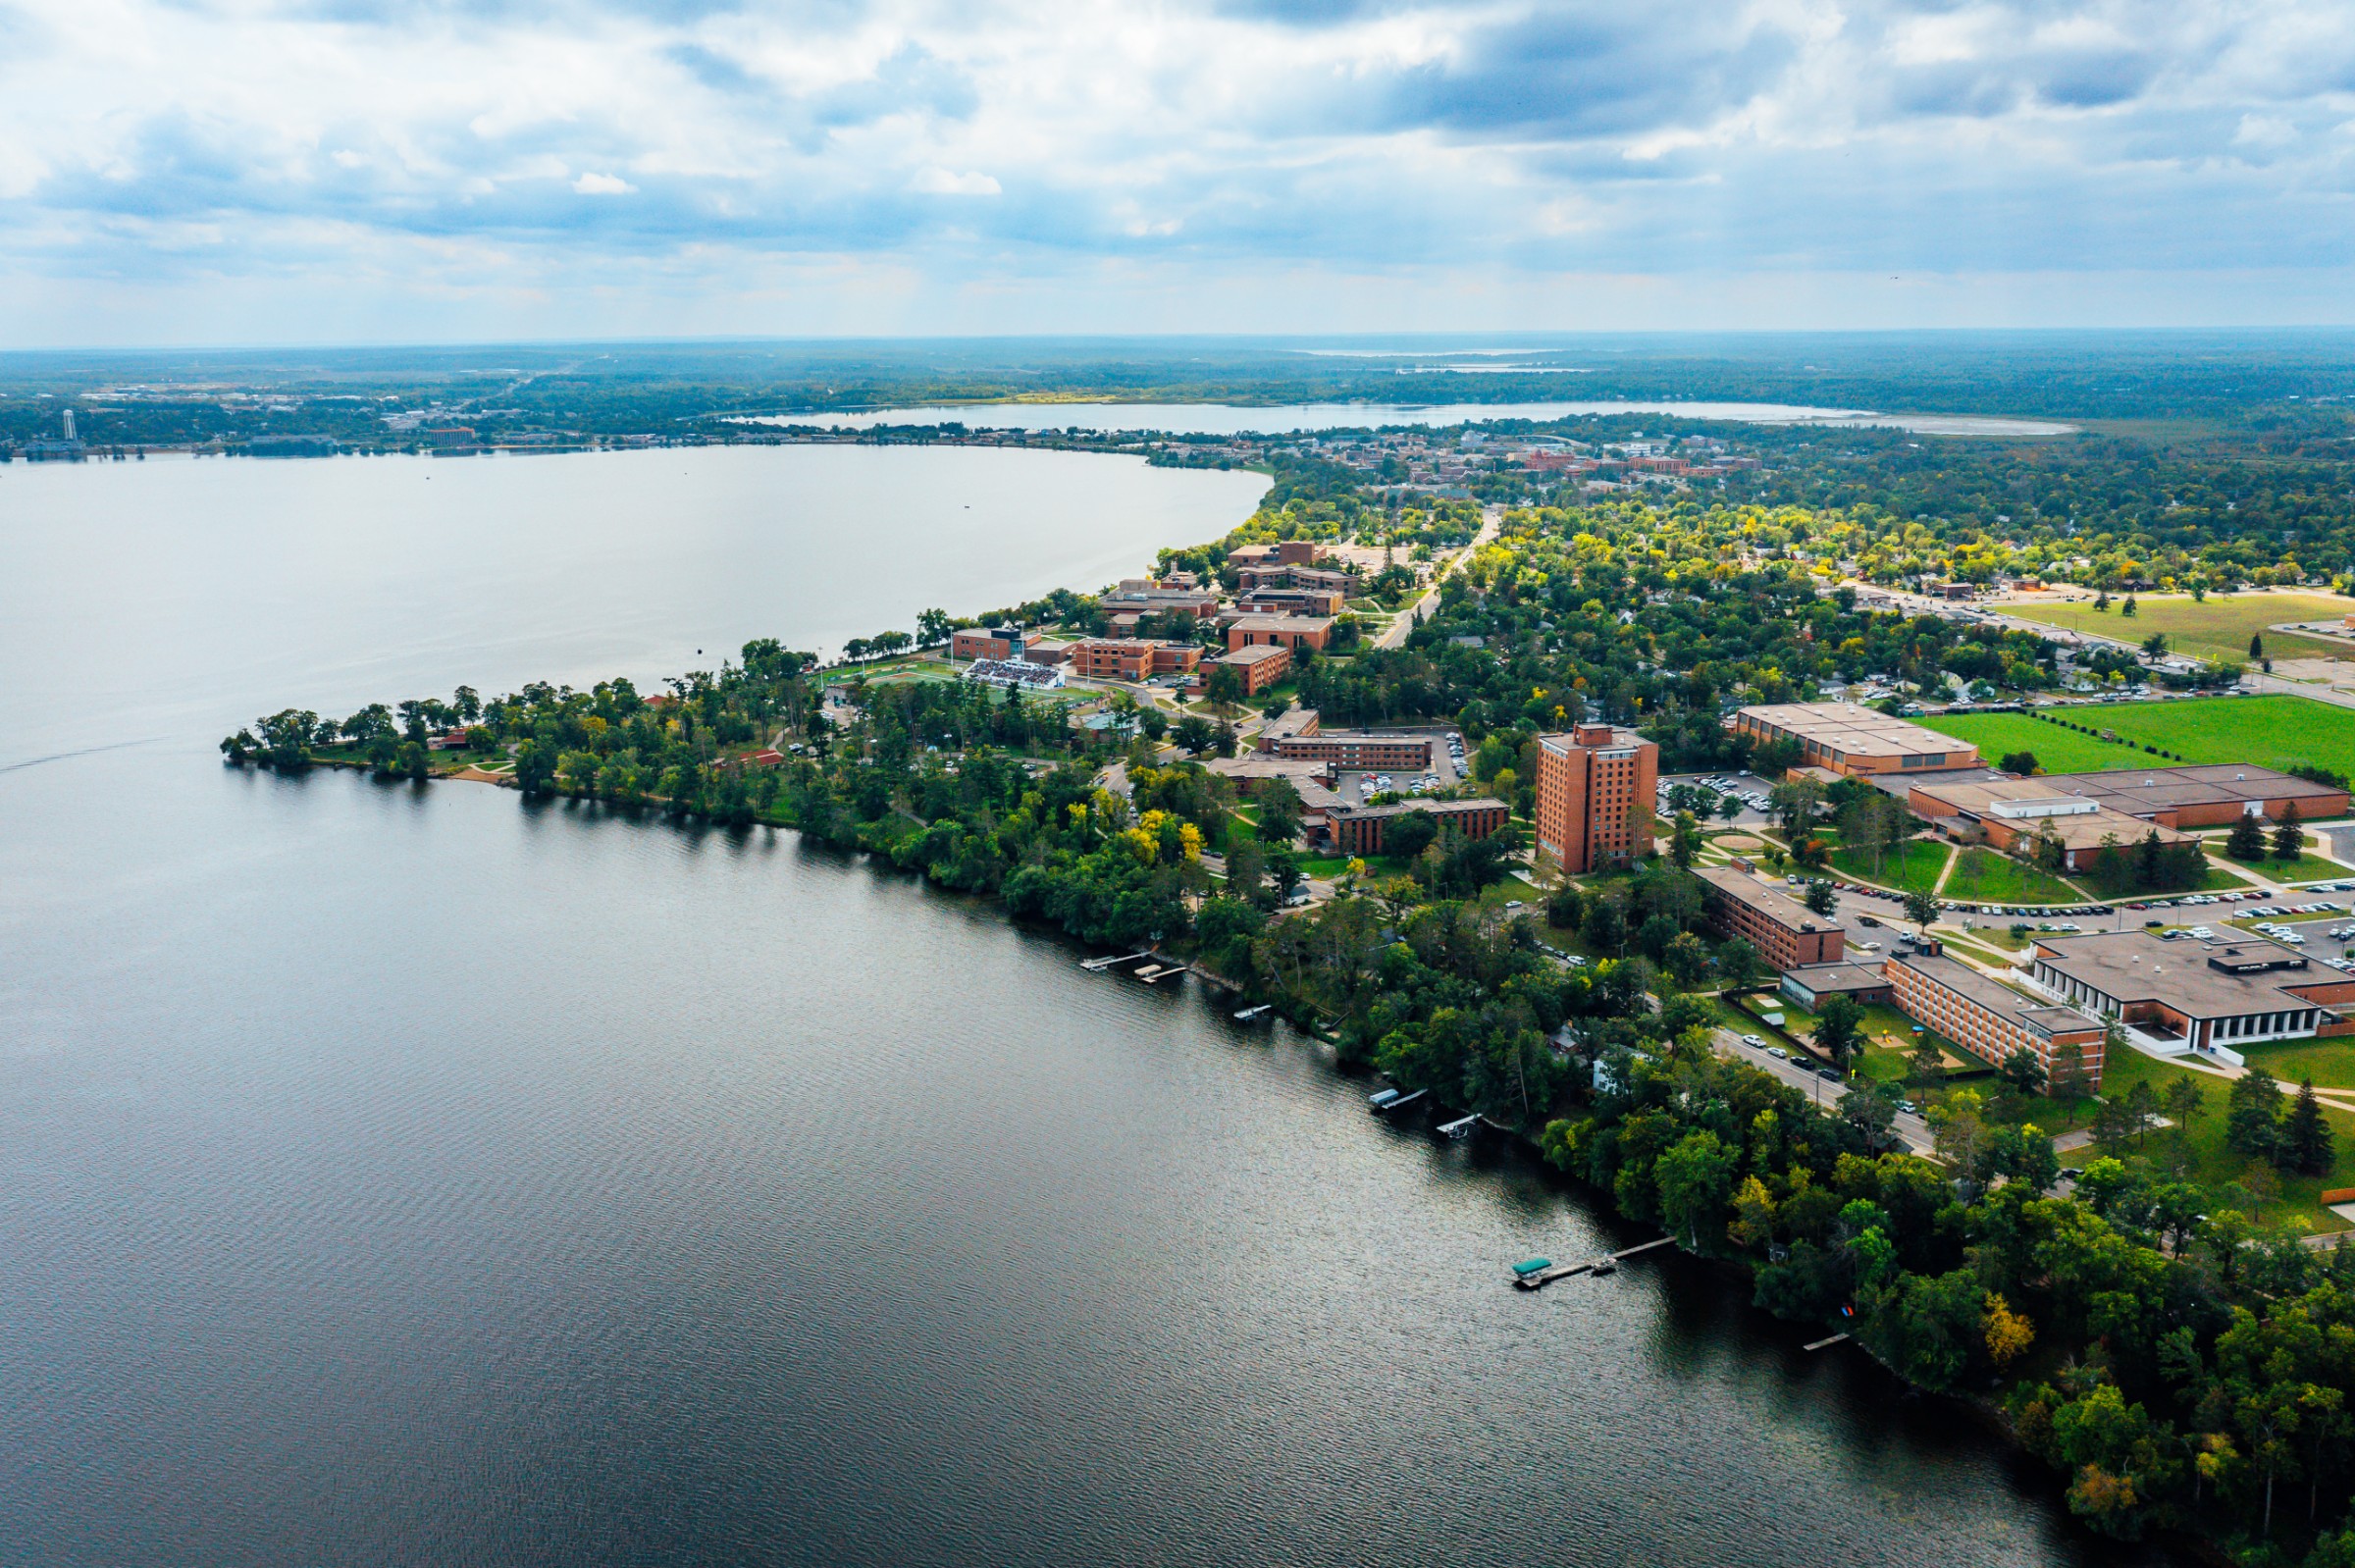 Bemidji State University and Lake Bemidji viewed from above